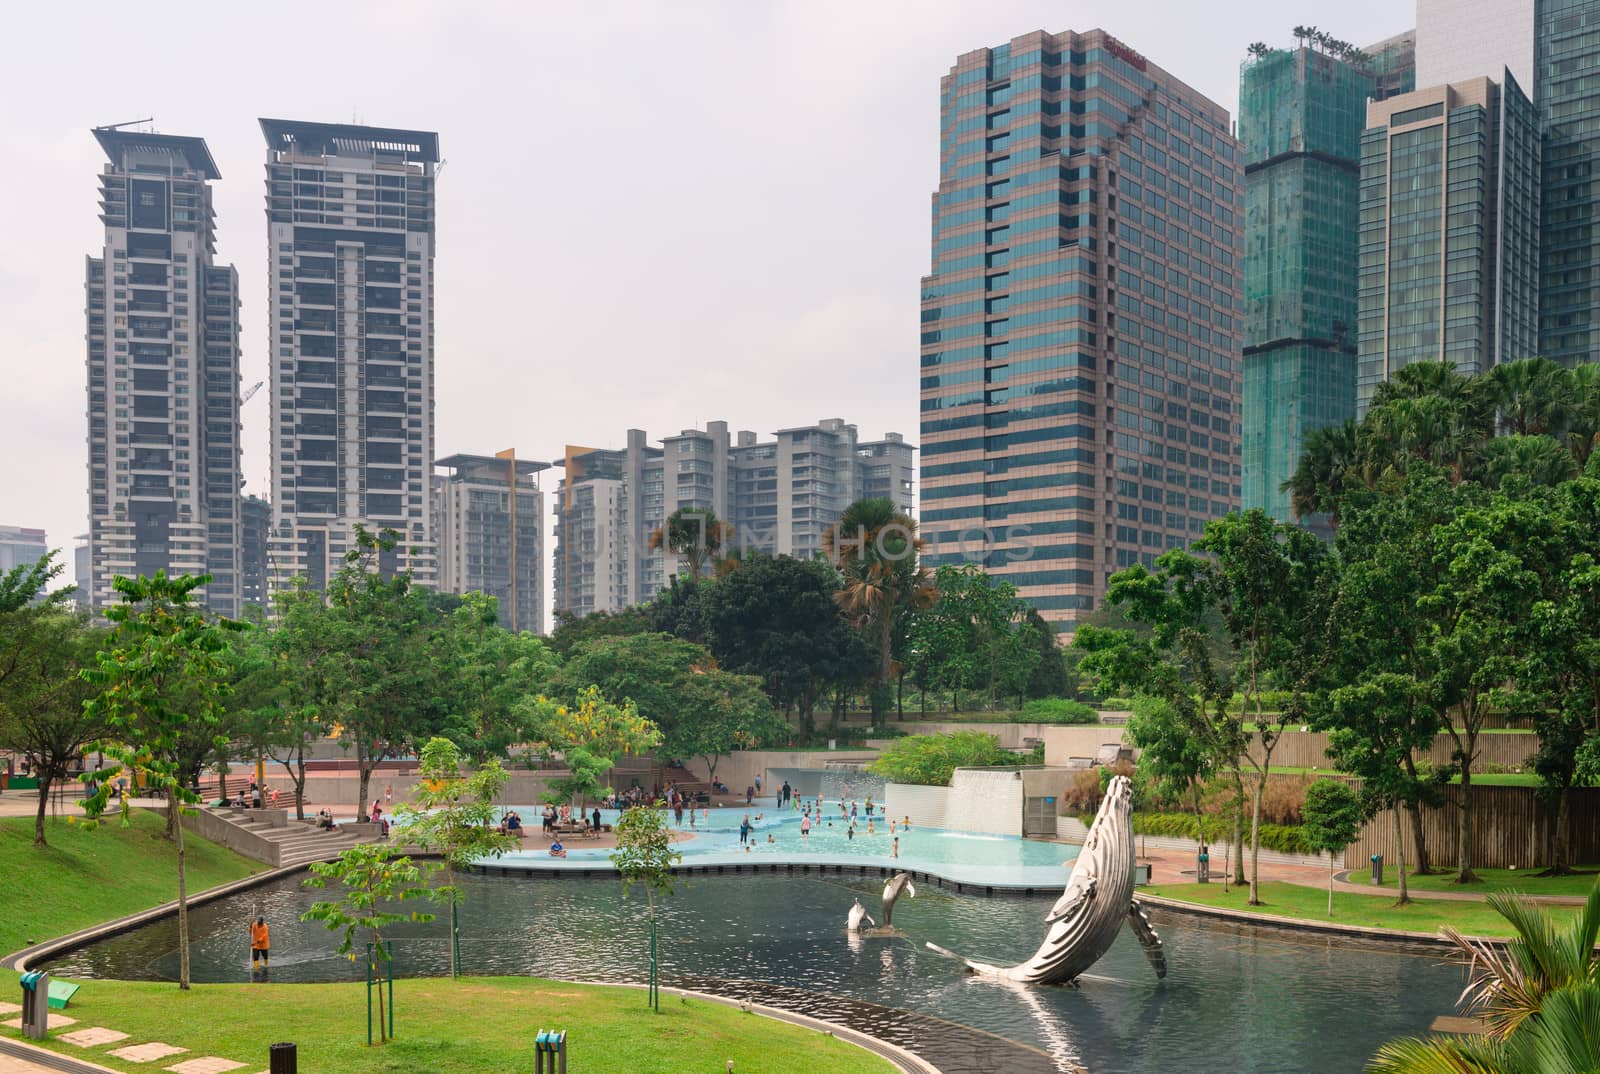 KUALA LUMPUR - JUN 15: KLCC Park is a public park located near Petronal twin towers on Jun 15, 2013 in Kuala Lumpur, Malaysia. 20 hectares park was designed by Roberto Burle Marx in 1980.